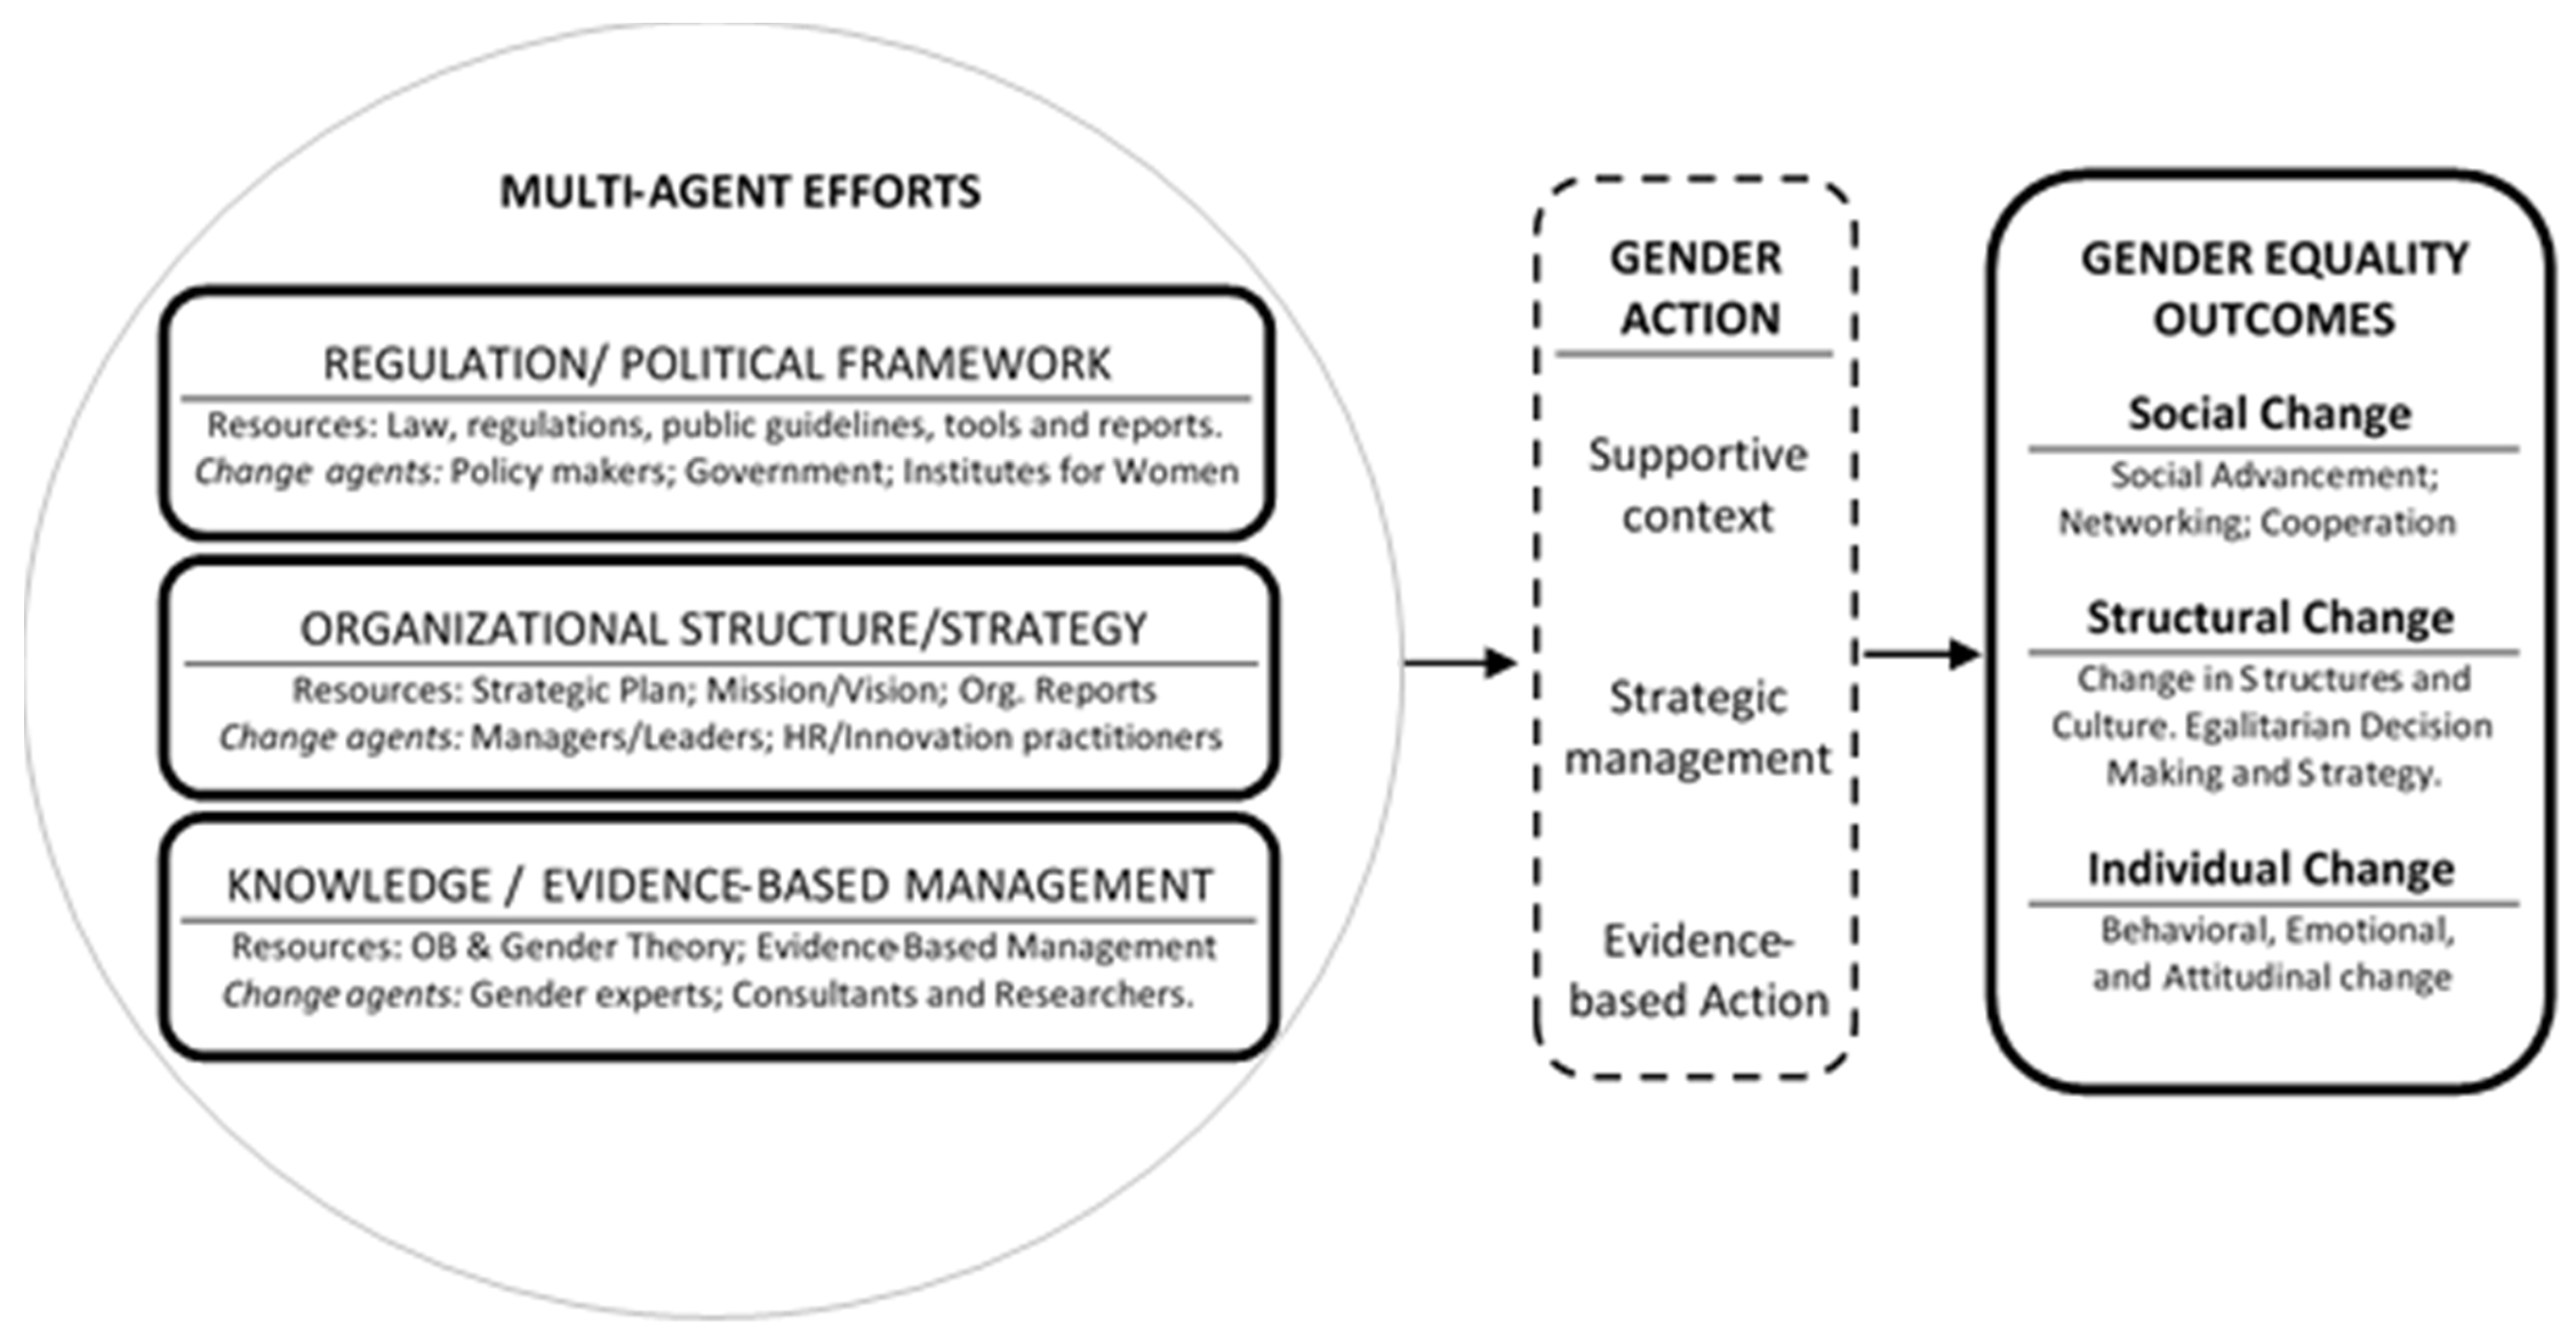 Conceptual framework combining Women's Empowerment Framework (WEF) with